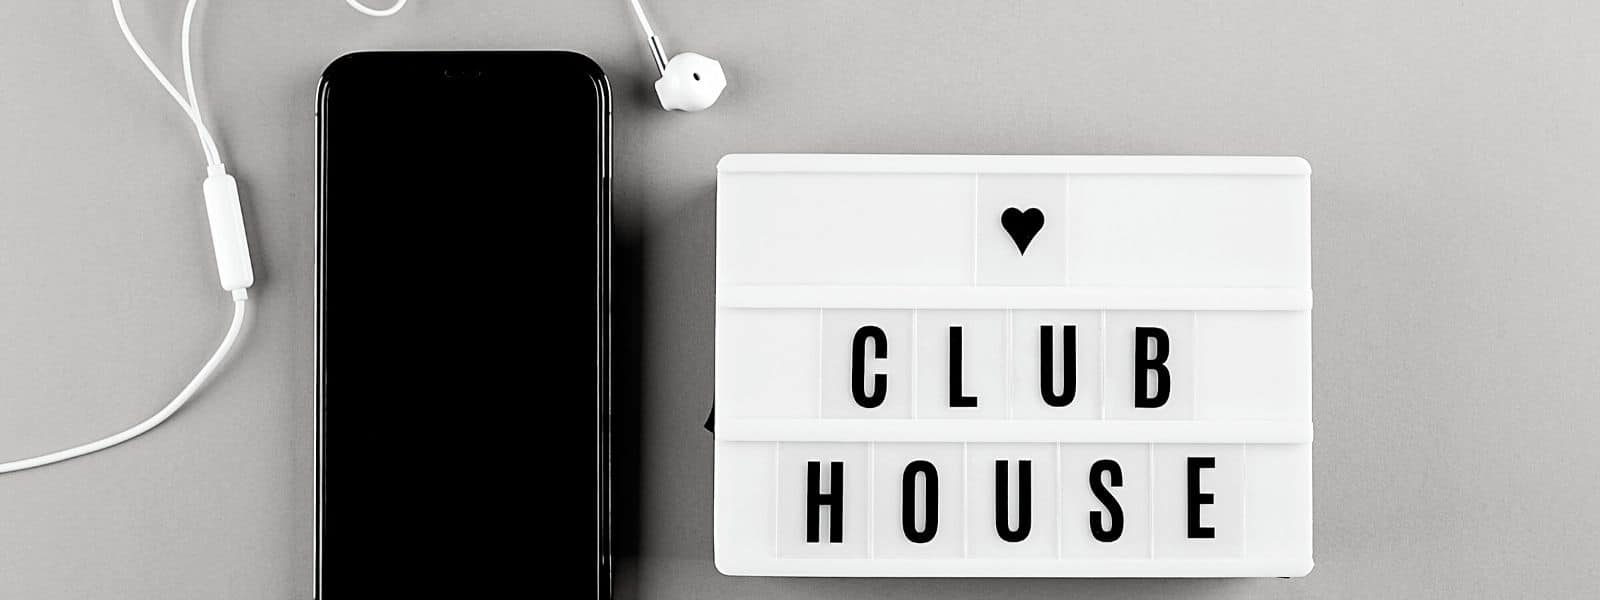 new social media app club house